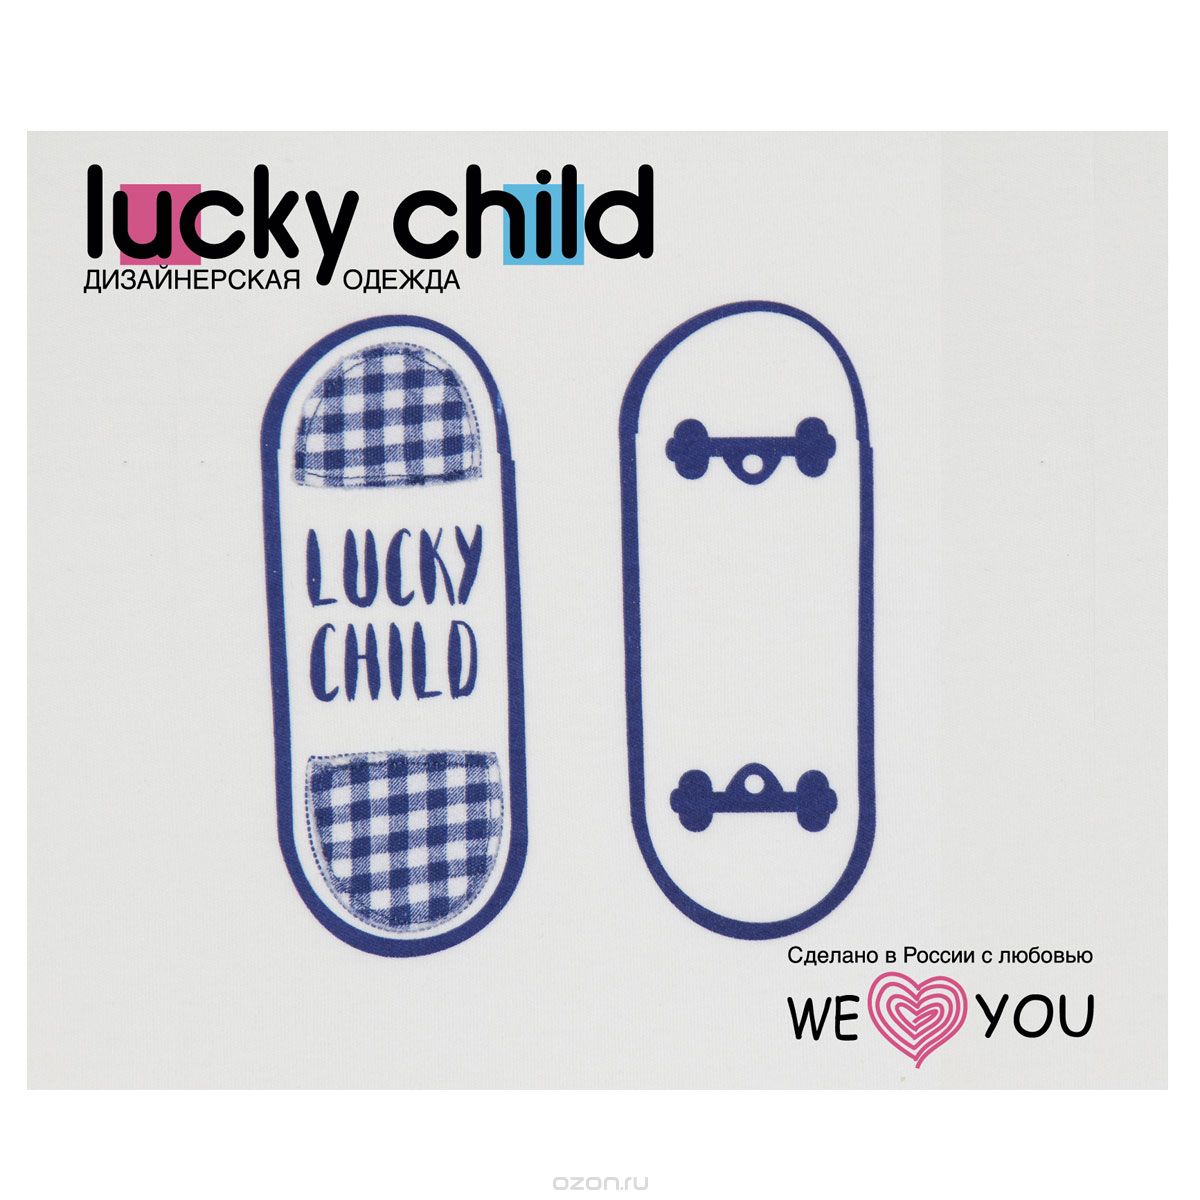    Lucky Child: , , : , . 13-411.  98/104